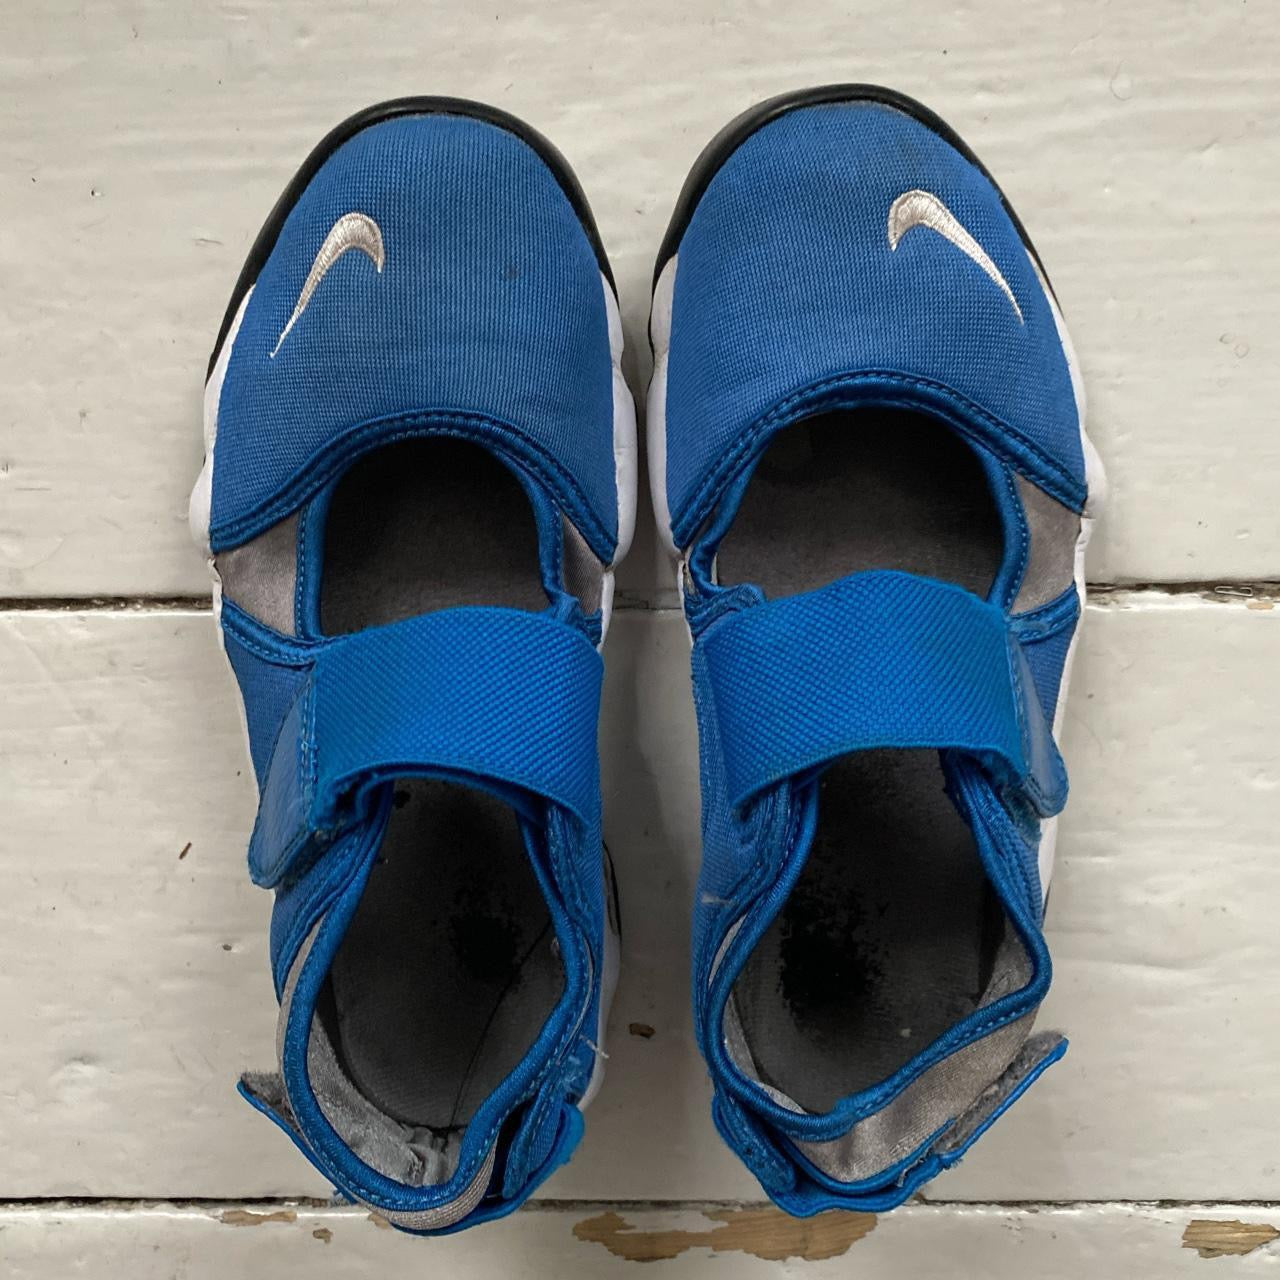 Nike Air Rift Blue and White (UK 3.5)